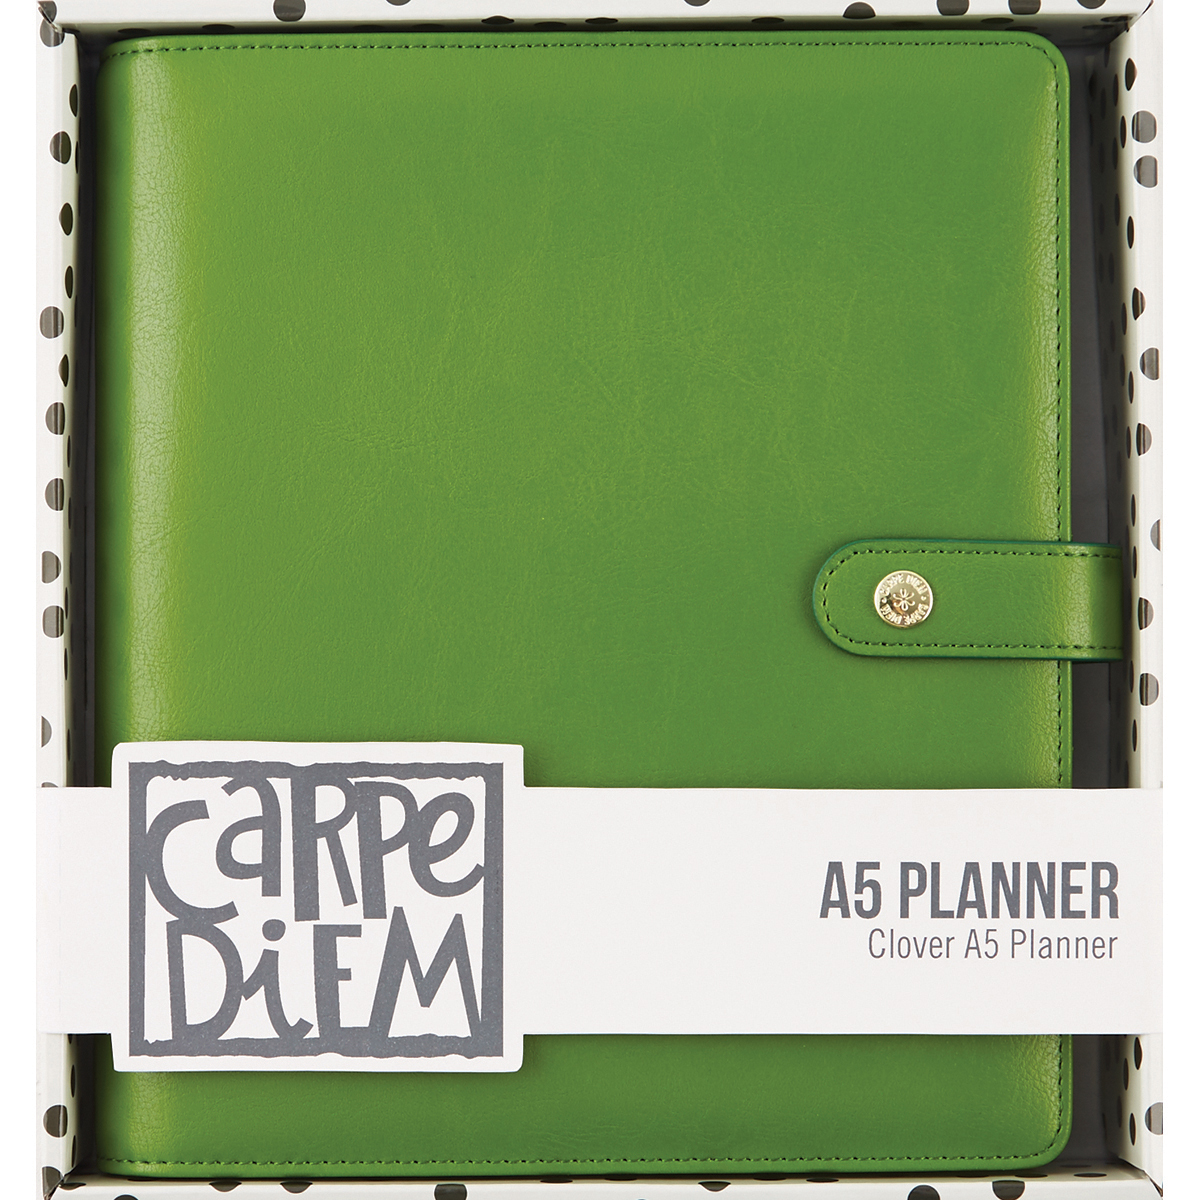 Carpe Diem A5 Planner Green